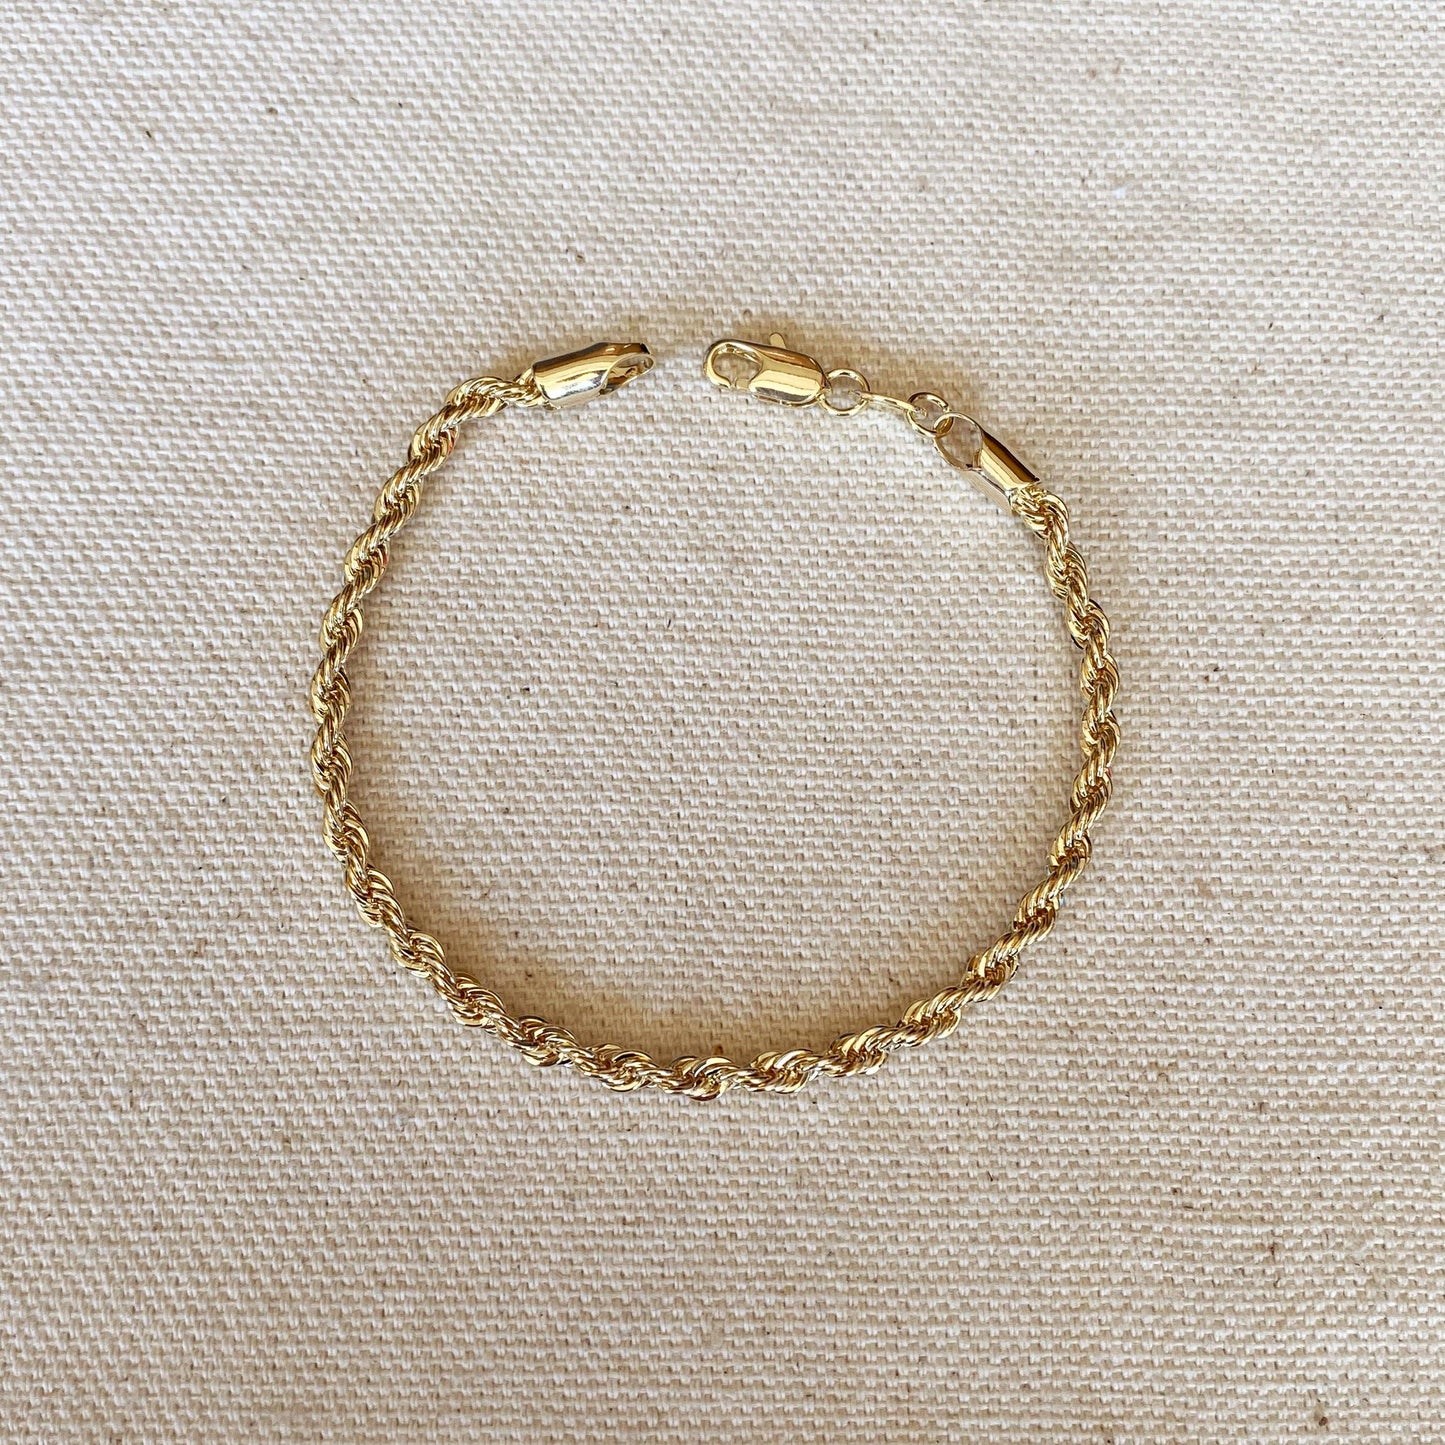 18k Gold Filled 3mm Rope Bracelet: 6.5 inches